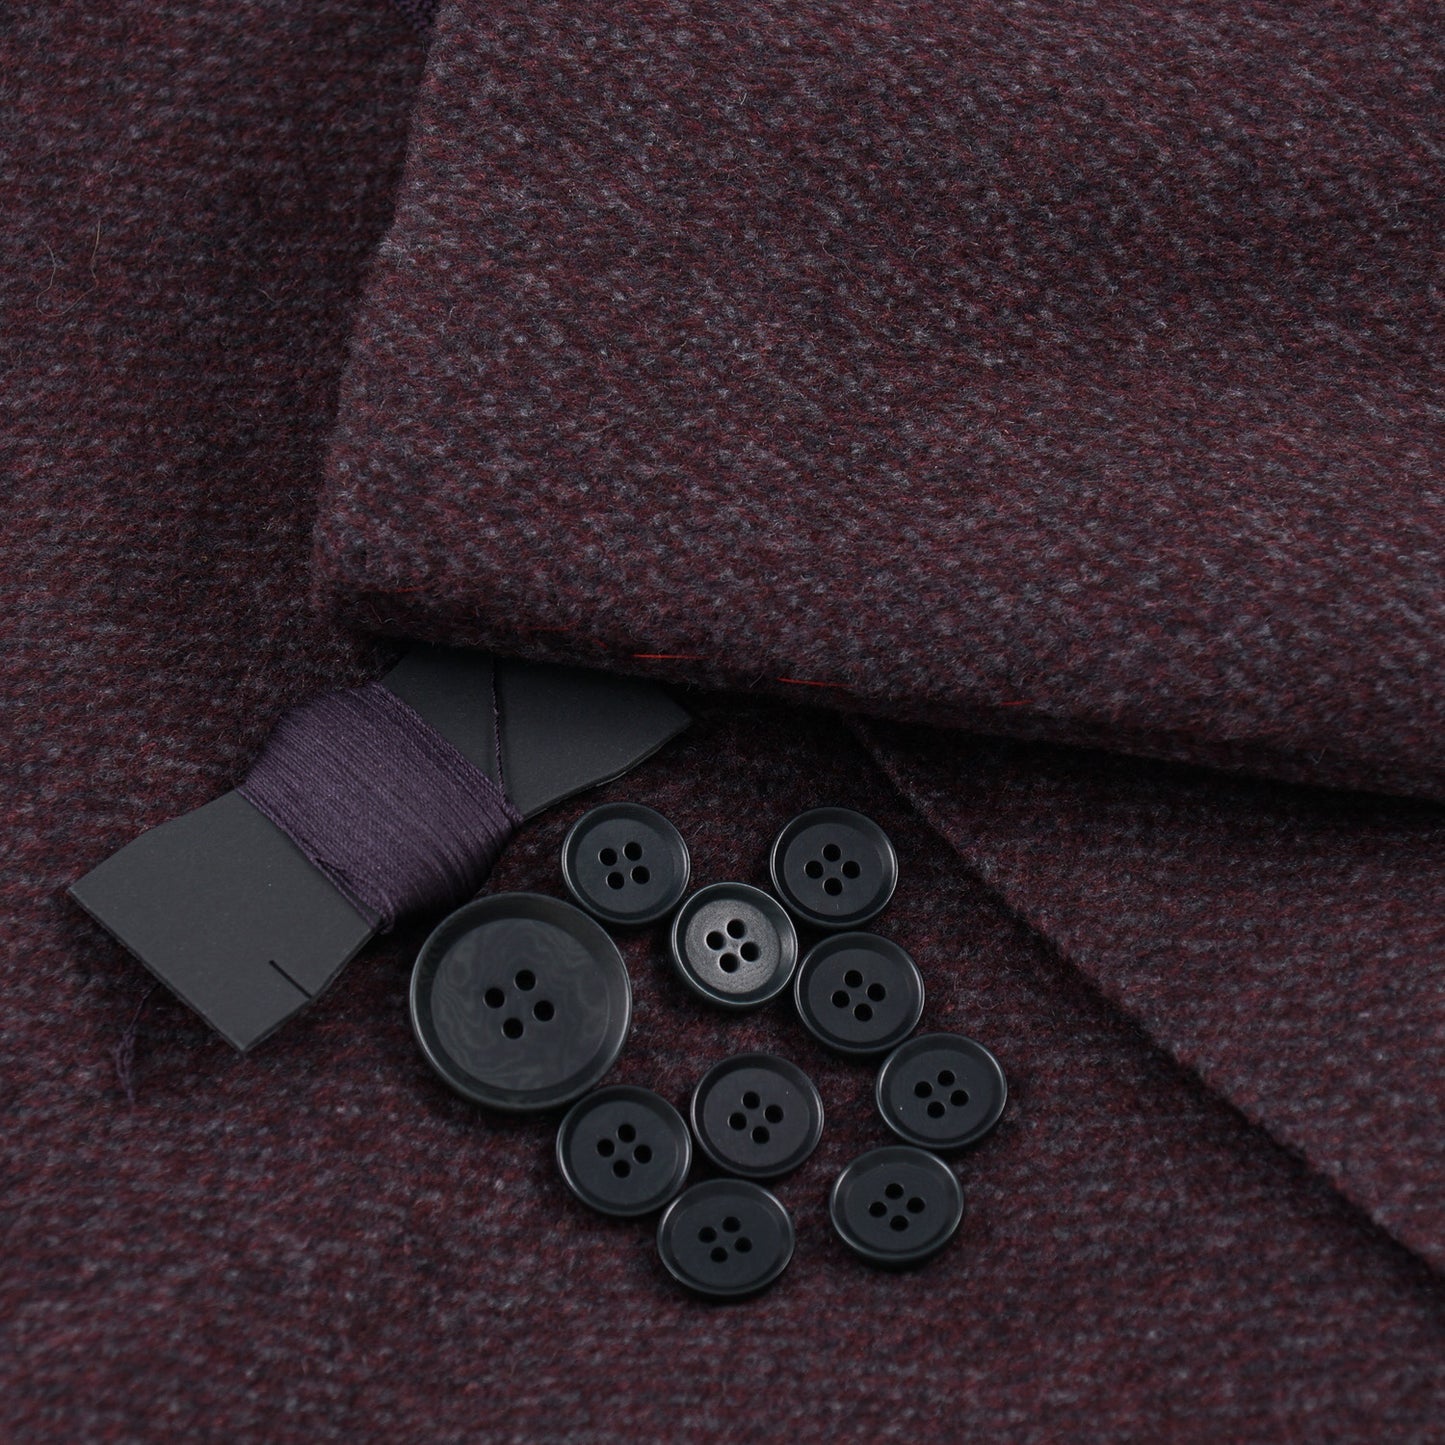 Isaia Purple Mélange Wool Overcoat - Top Shelf Apparel